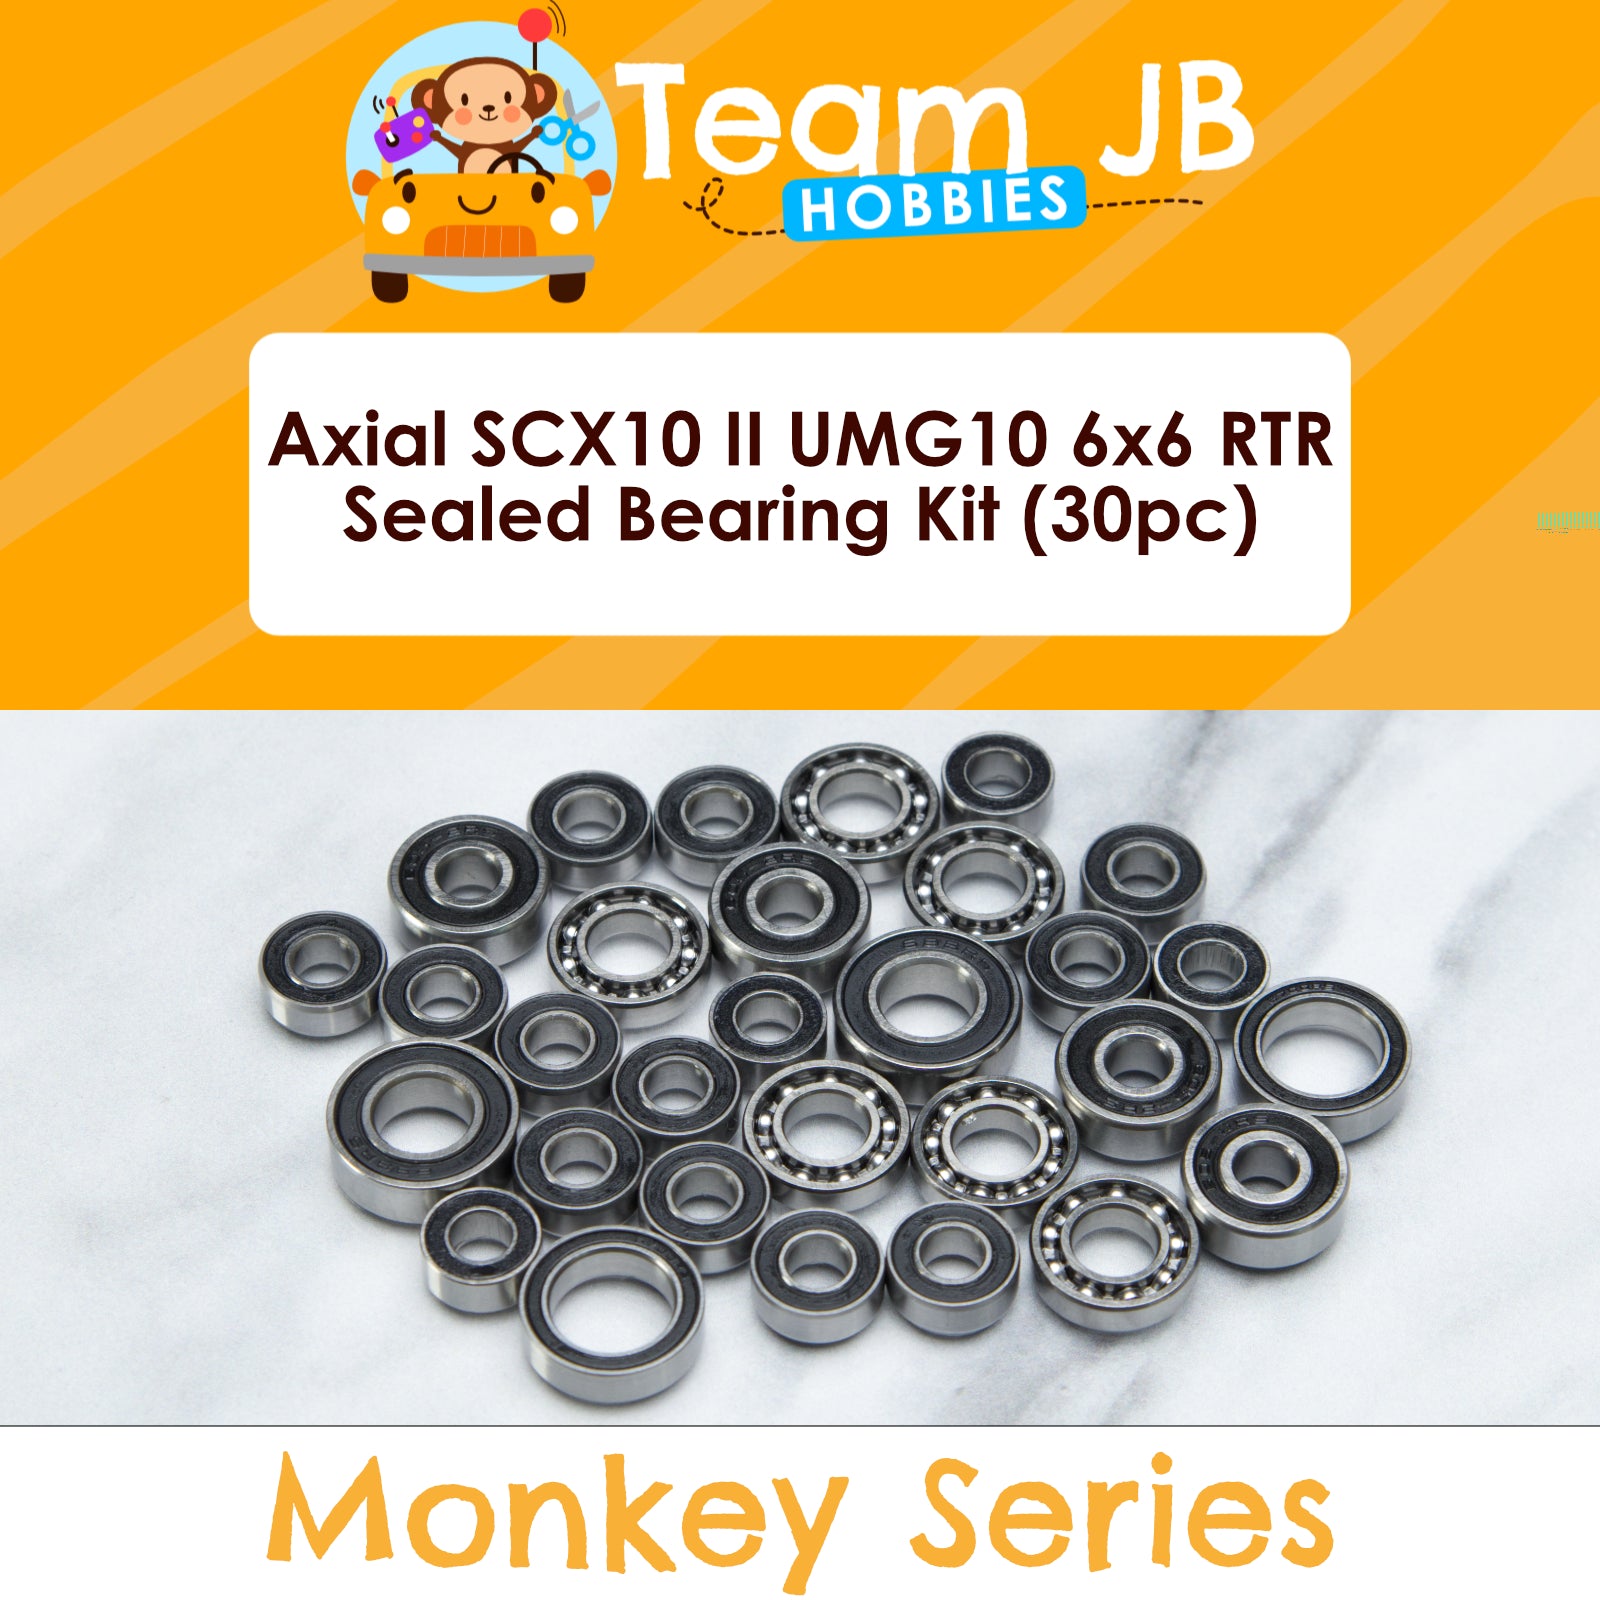 Axial SCX10 II UMG10 6x6 RTR - Sealed Bearing Kit